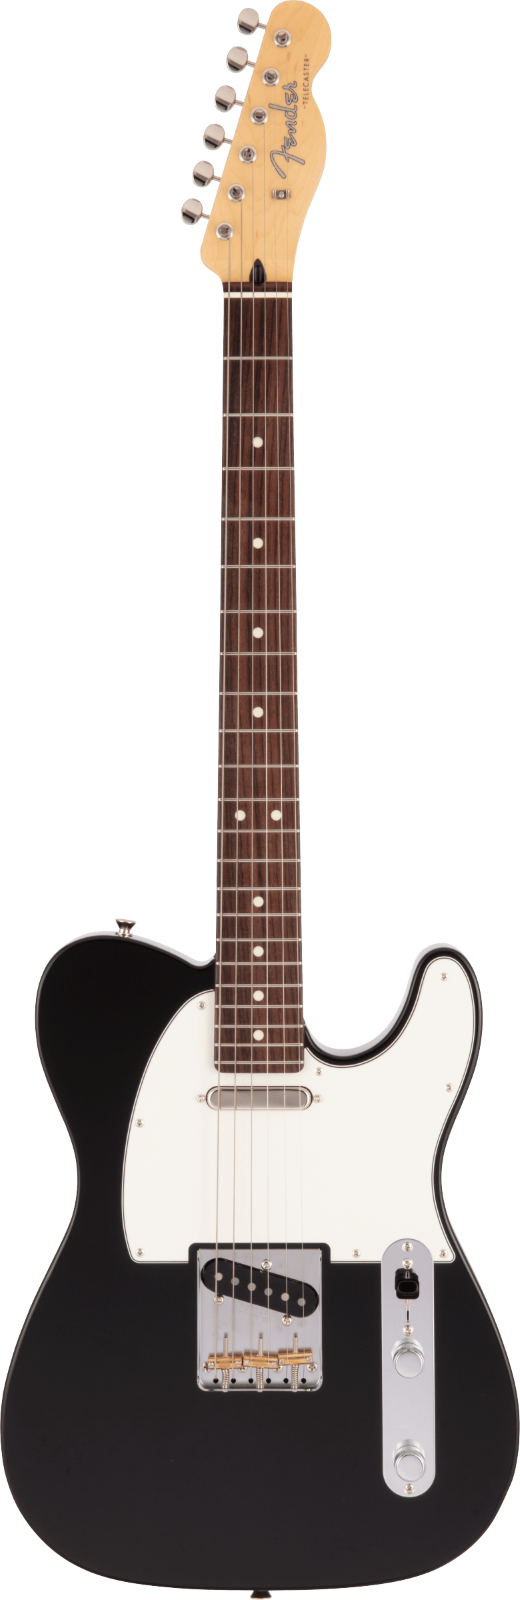 Fender Made in Japan Hybrid II Telecaster, Palisandergriffbrett, schwarz : photo 1